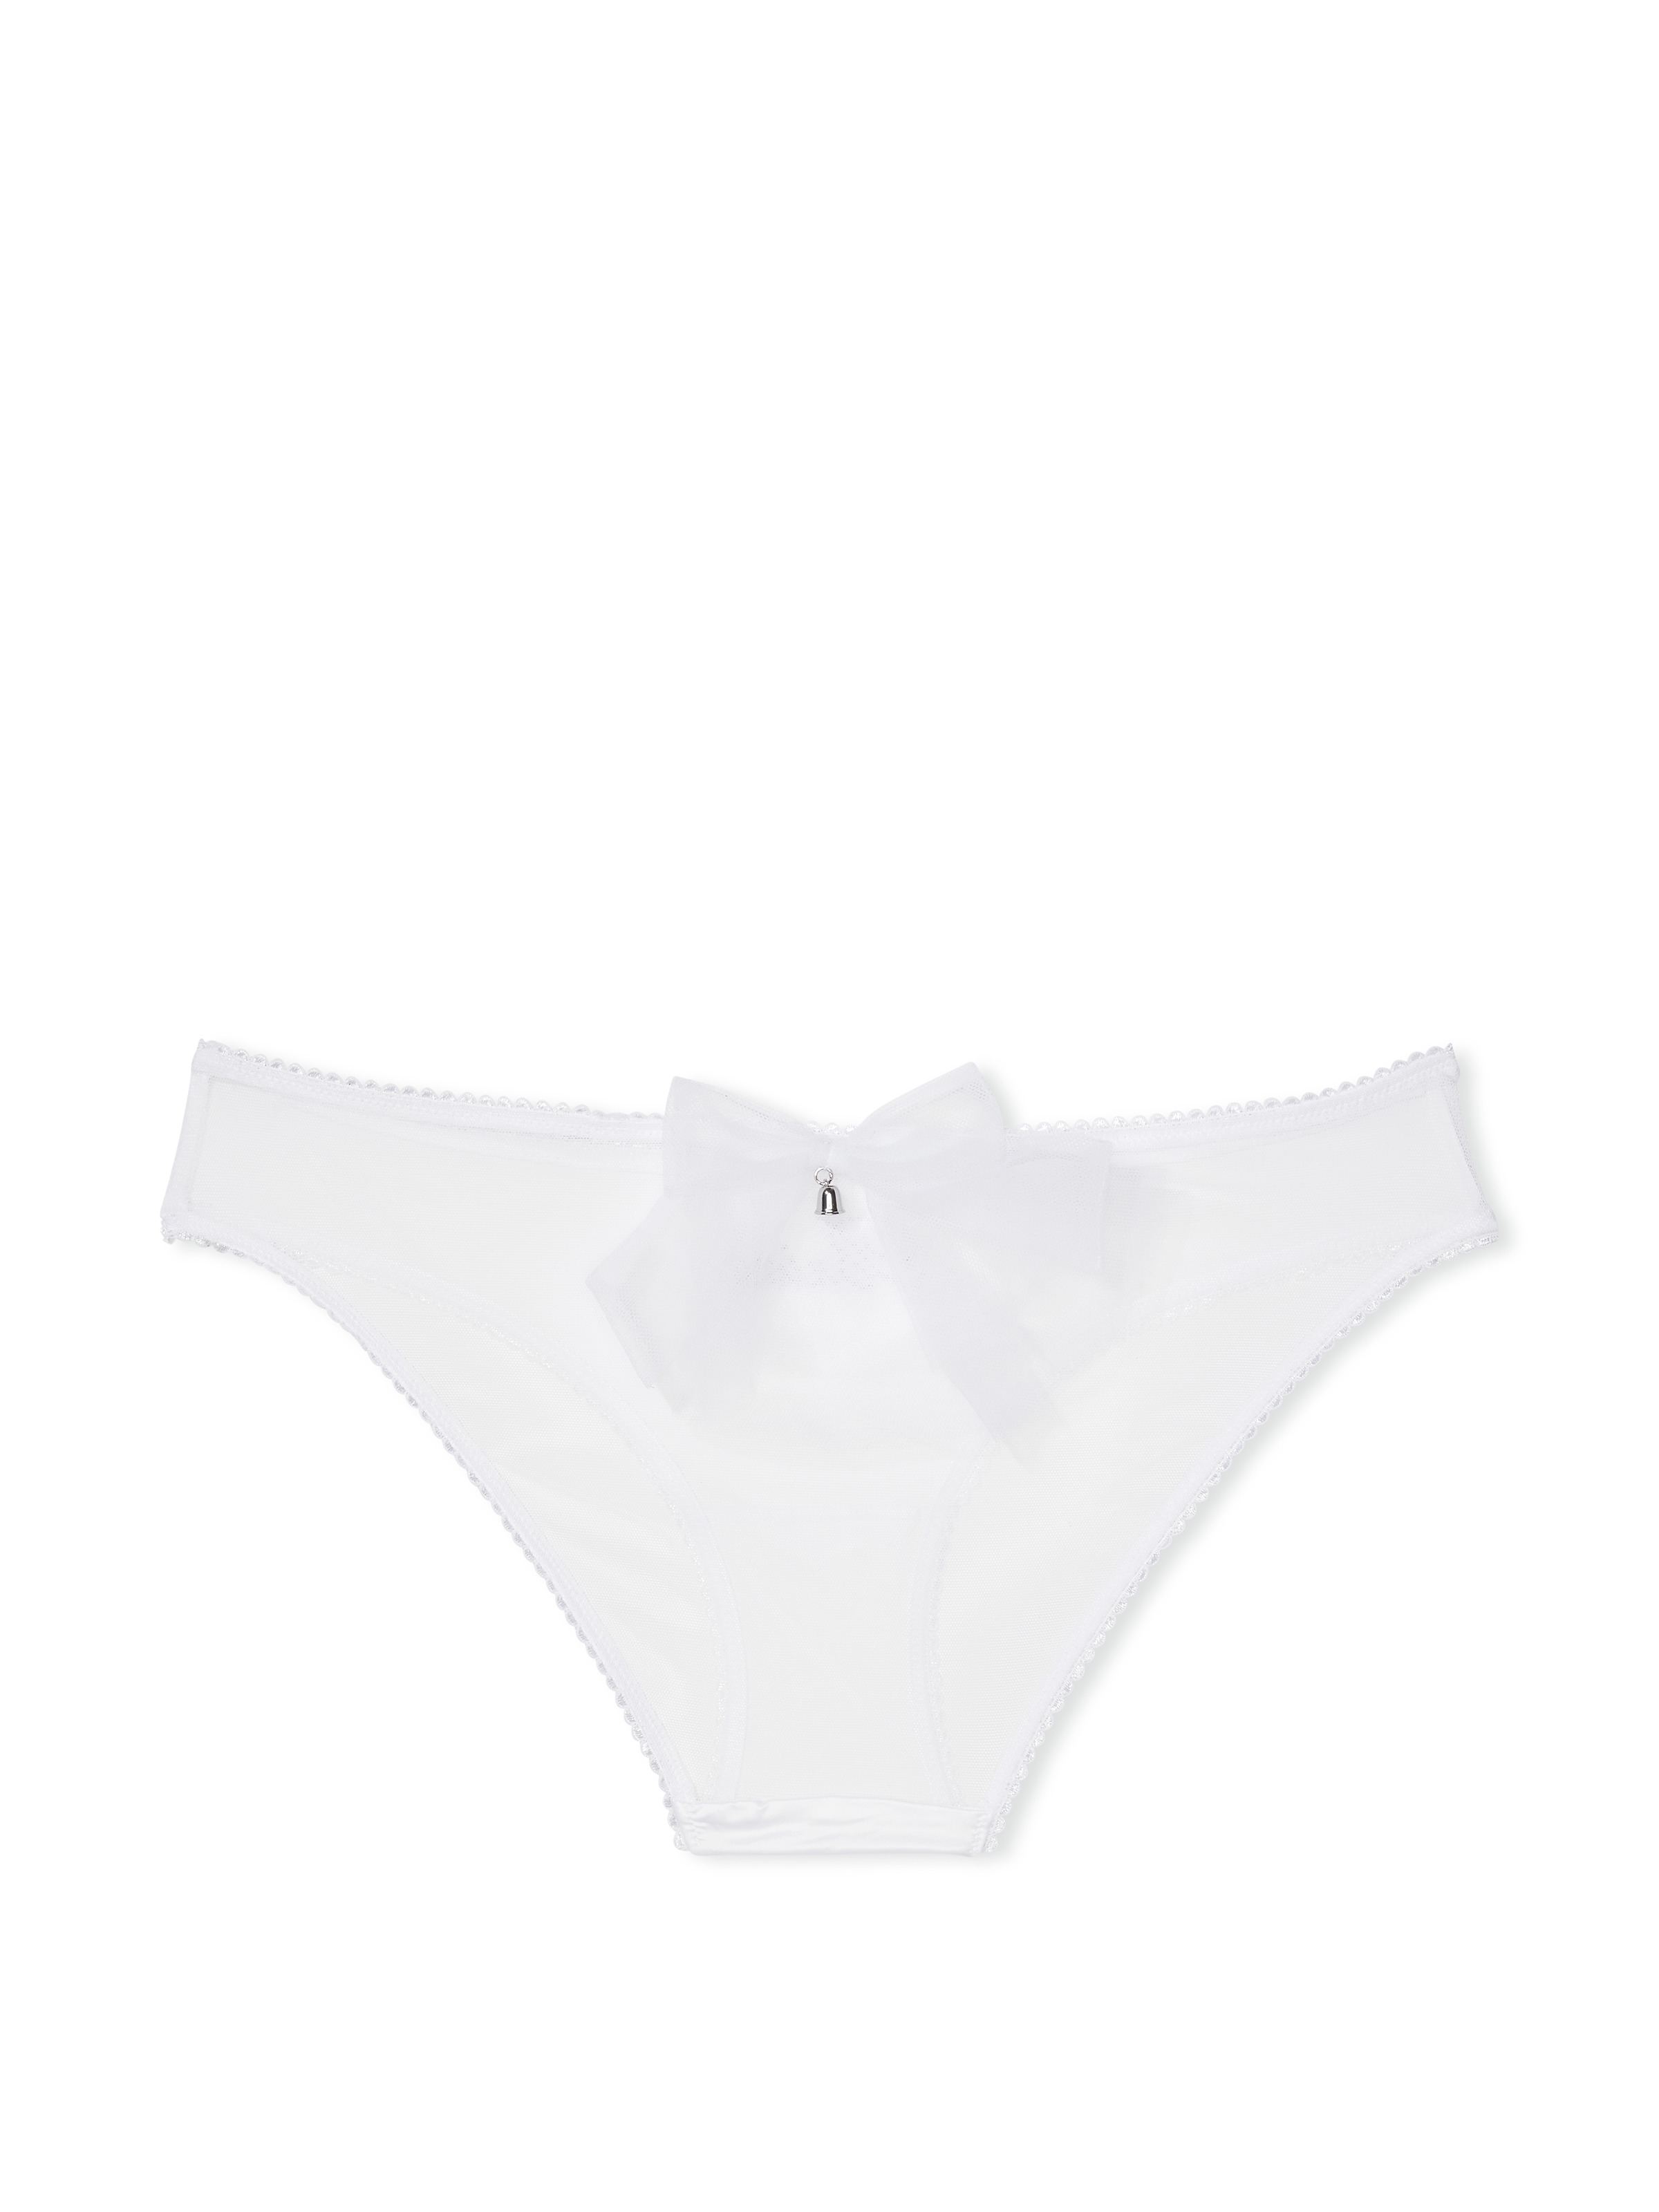 Victoria Secret Cheekini/culotte Bikini Coquine White Bridal Panty Medium  NWT